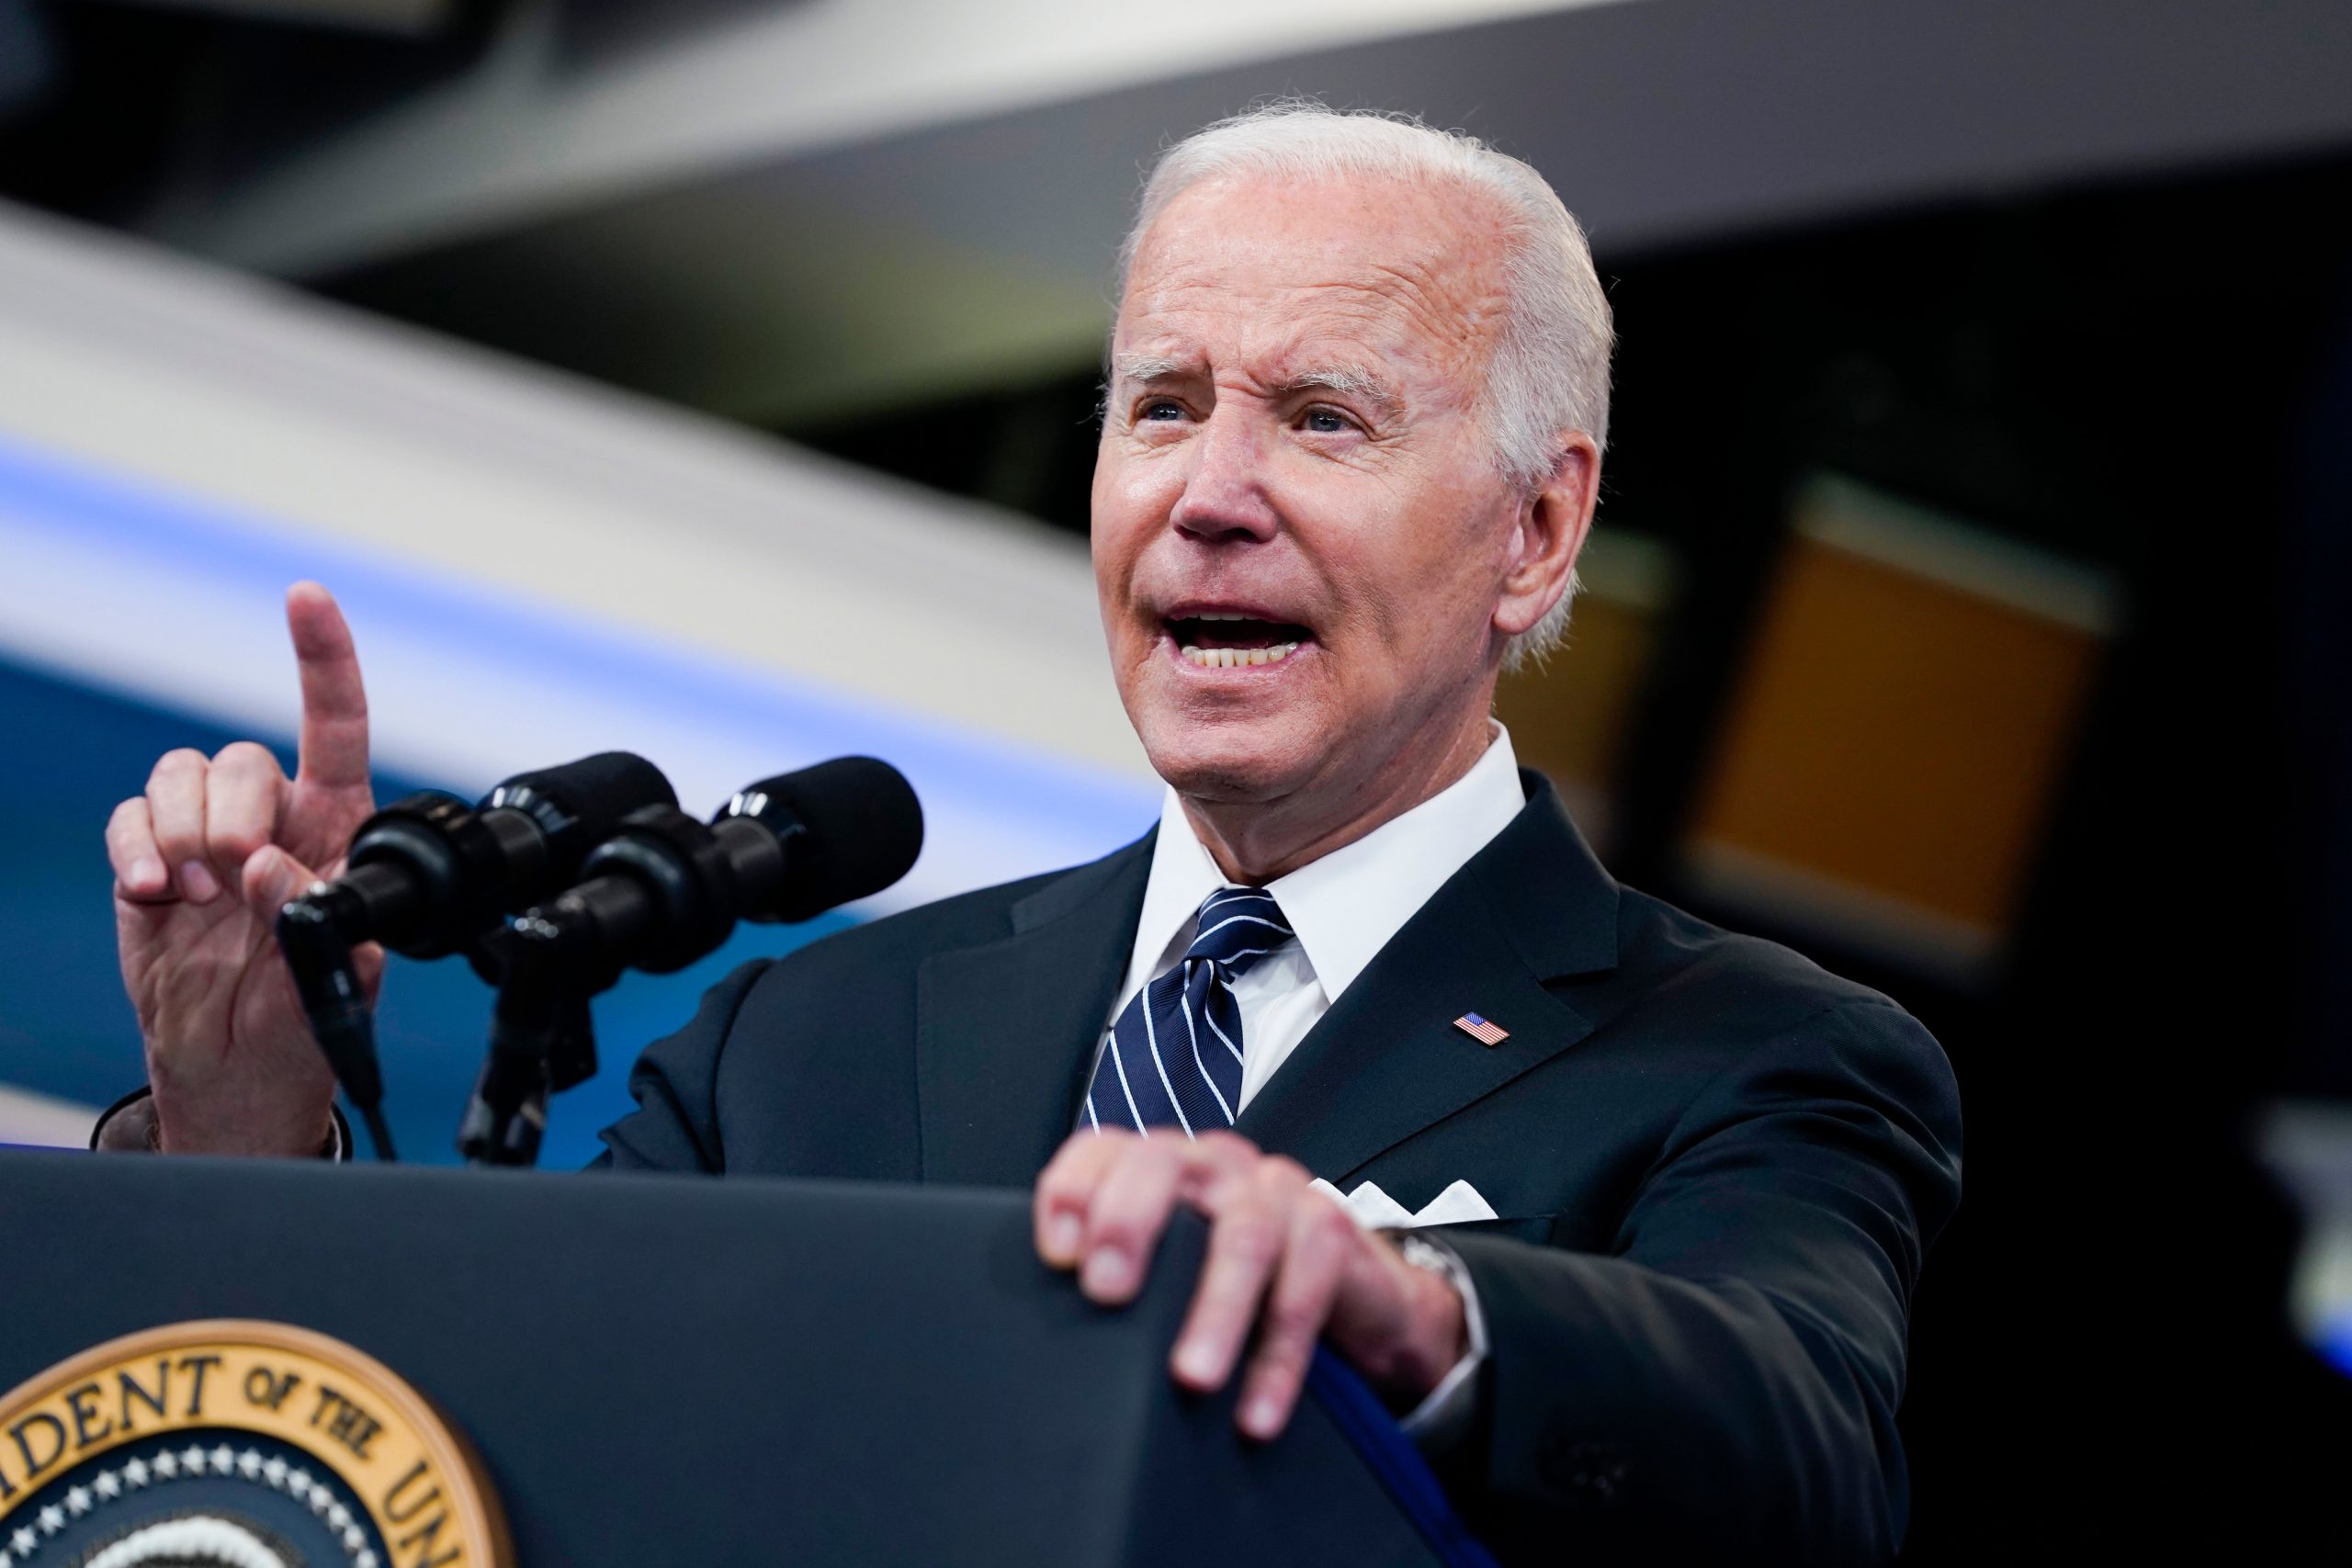 Joe Biden says ‘sad day’ as Roe v Wade overturned: Key takeaways from address